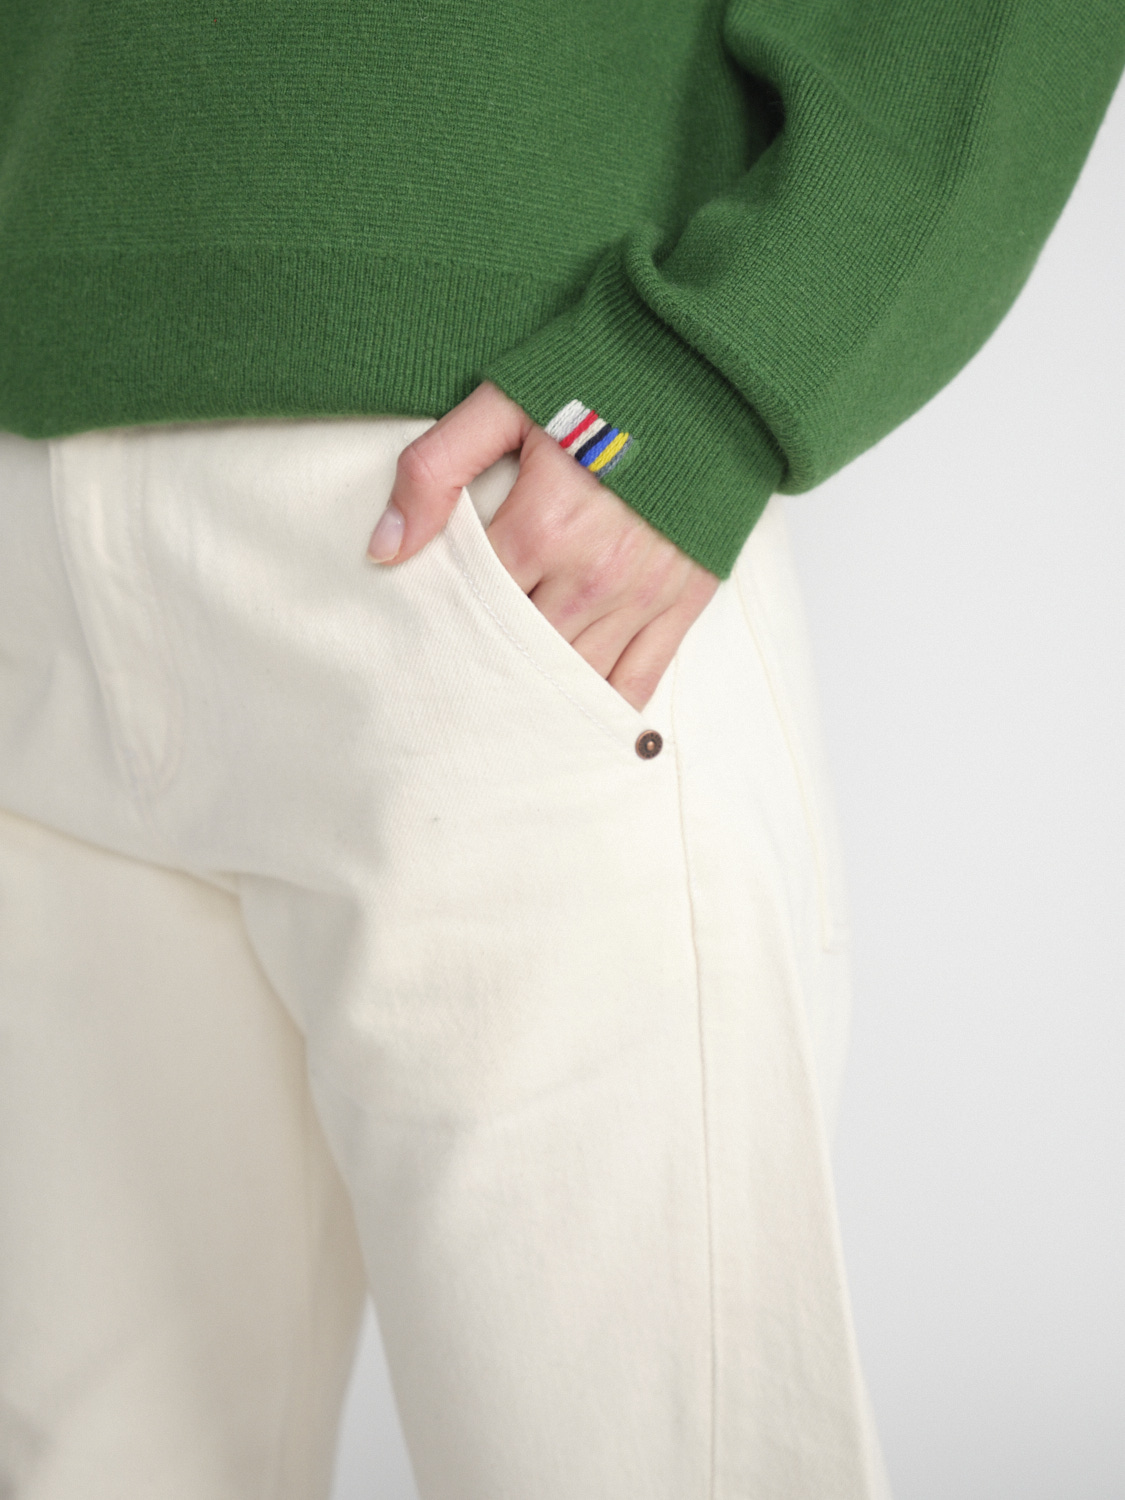 Extreme Cashmere N° 316 Lana - Jersey de cachemira con cuello de pico y doble faz  verde Talla única